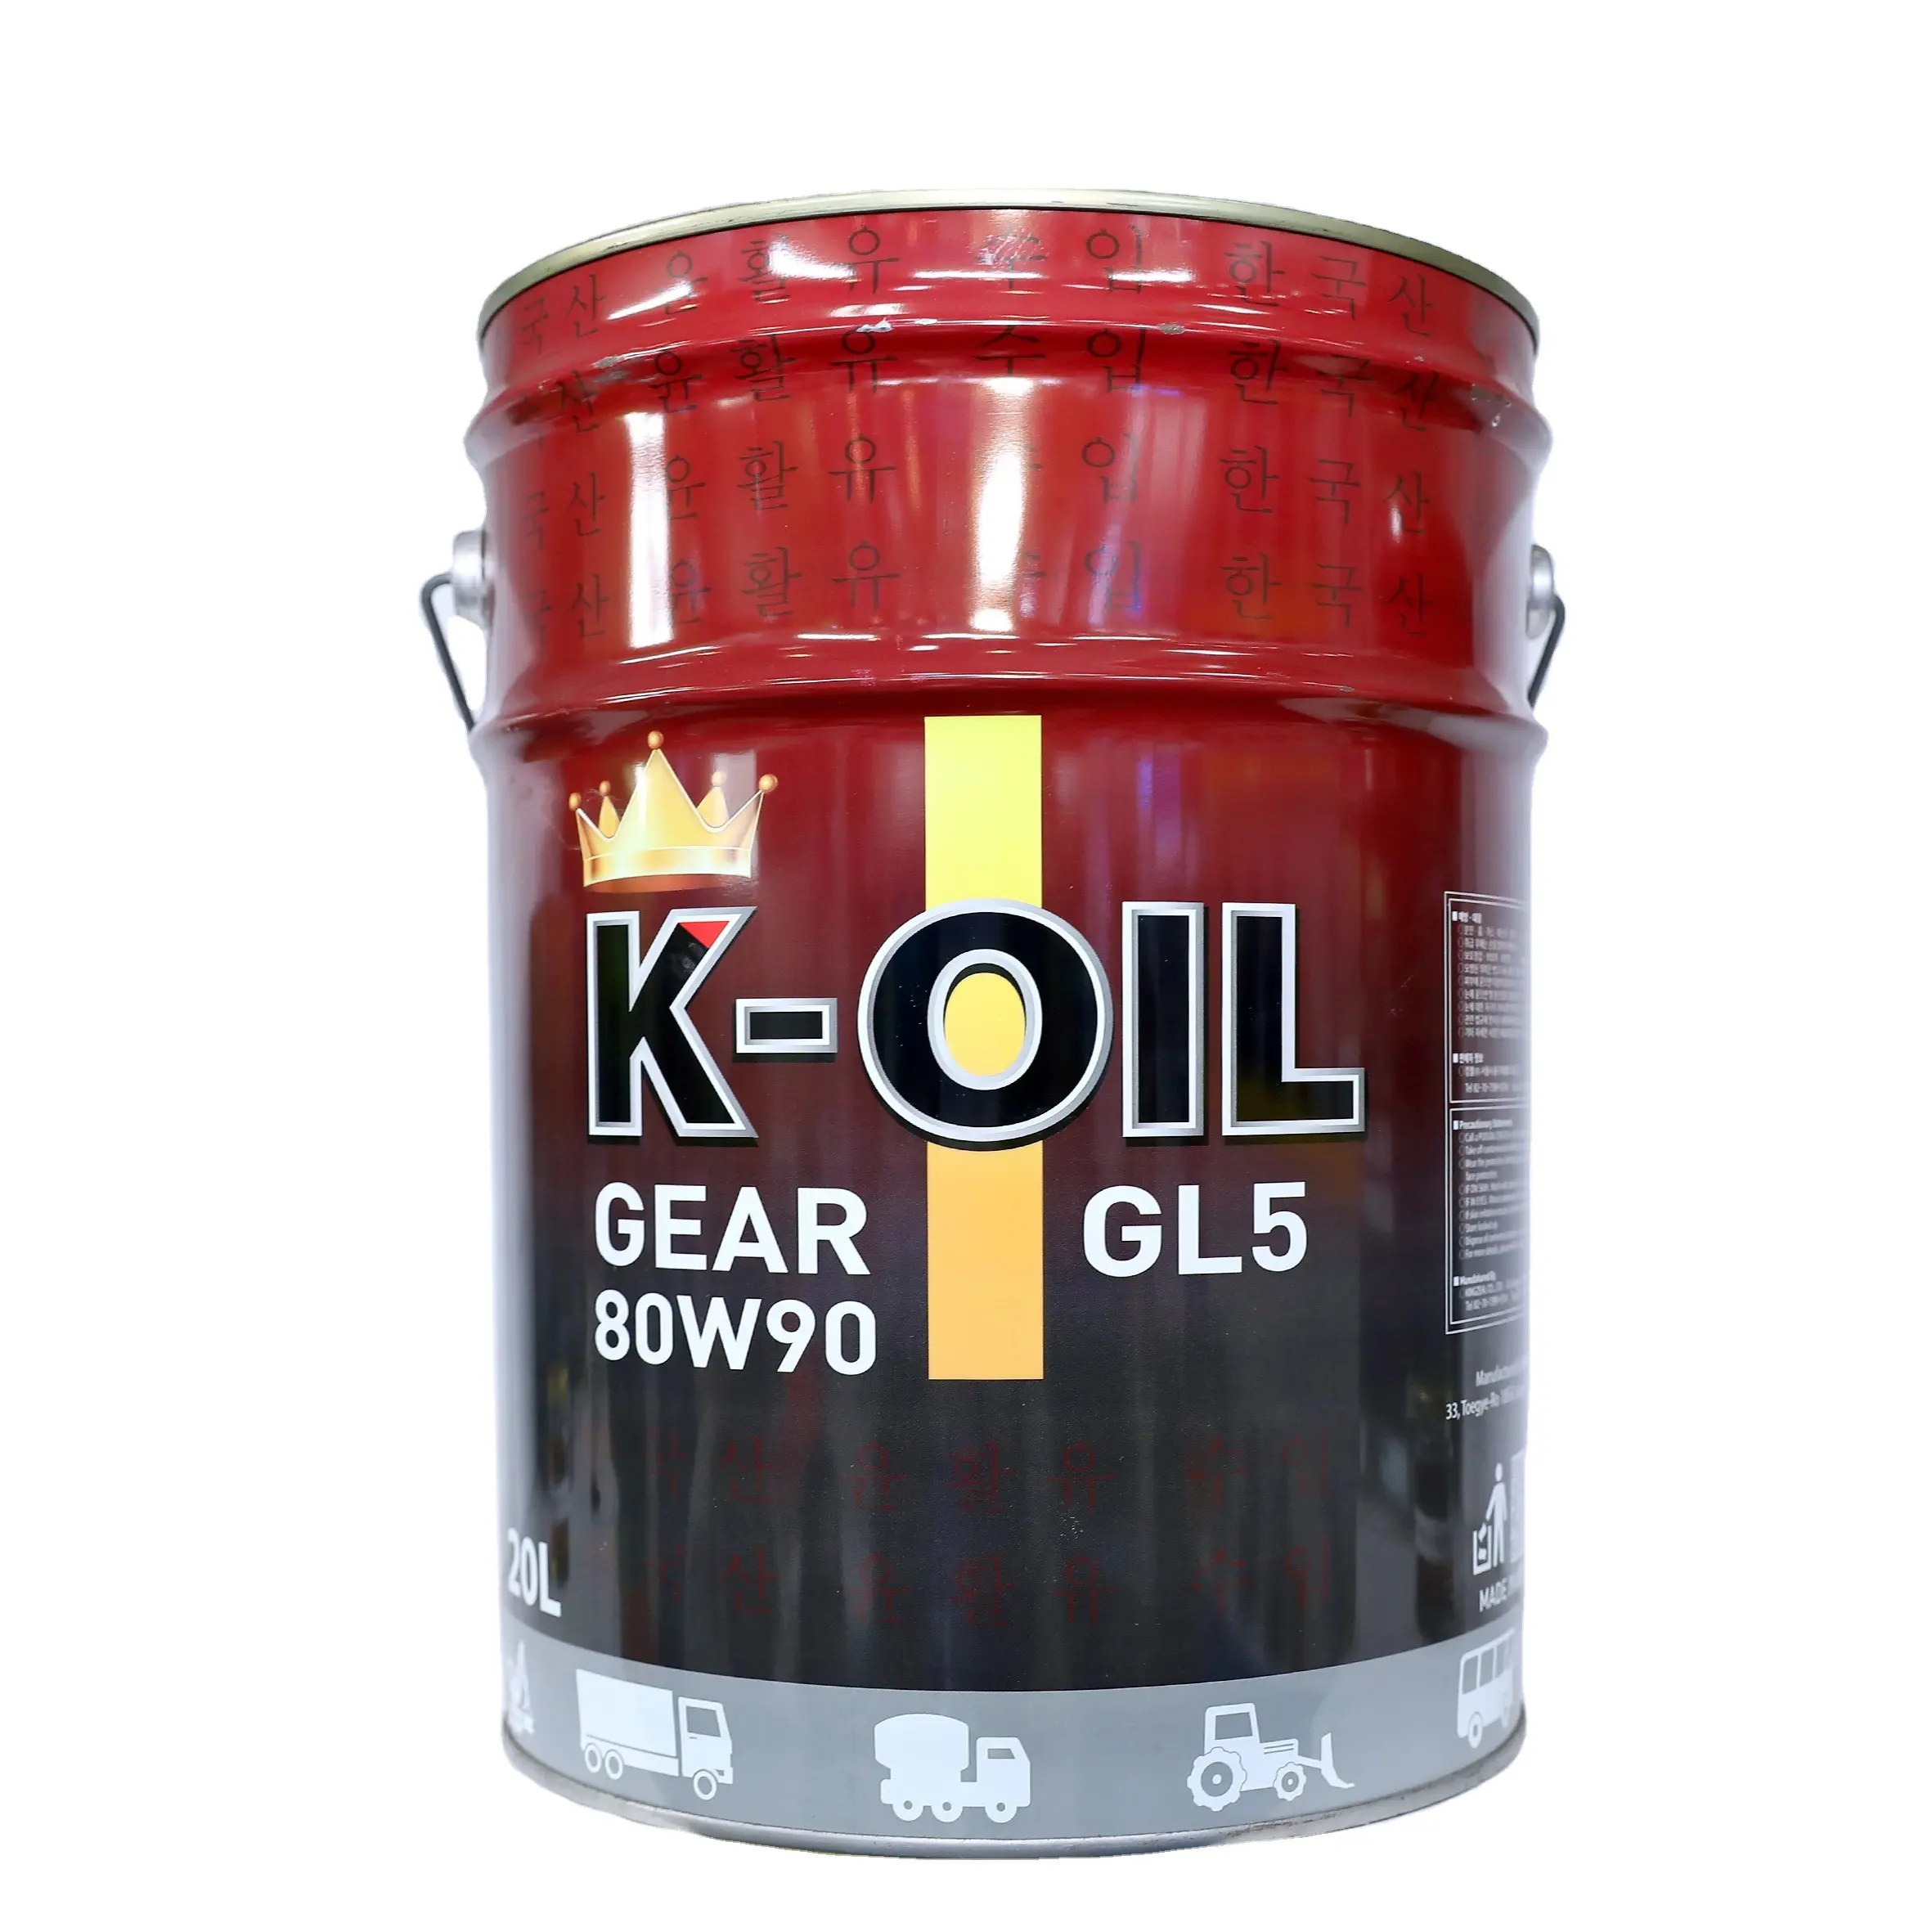 K-OIL GEAR GL-5 80W90, Vietnam manufacturer, premium manual transmission oil and low price